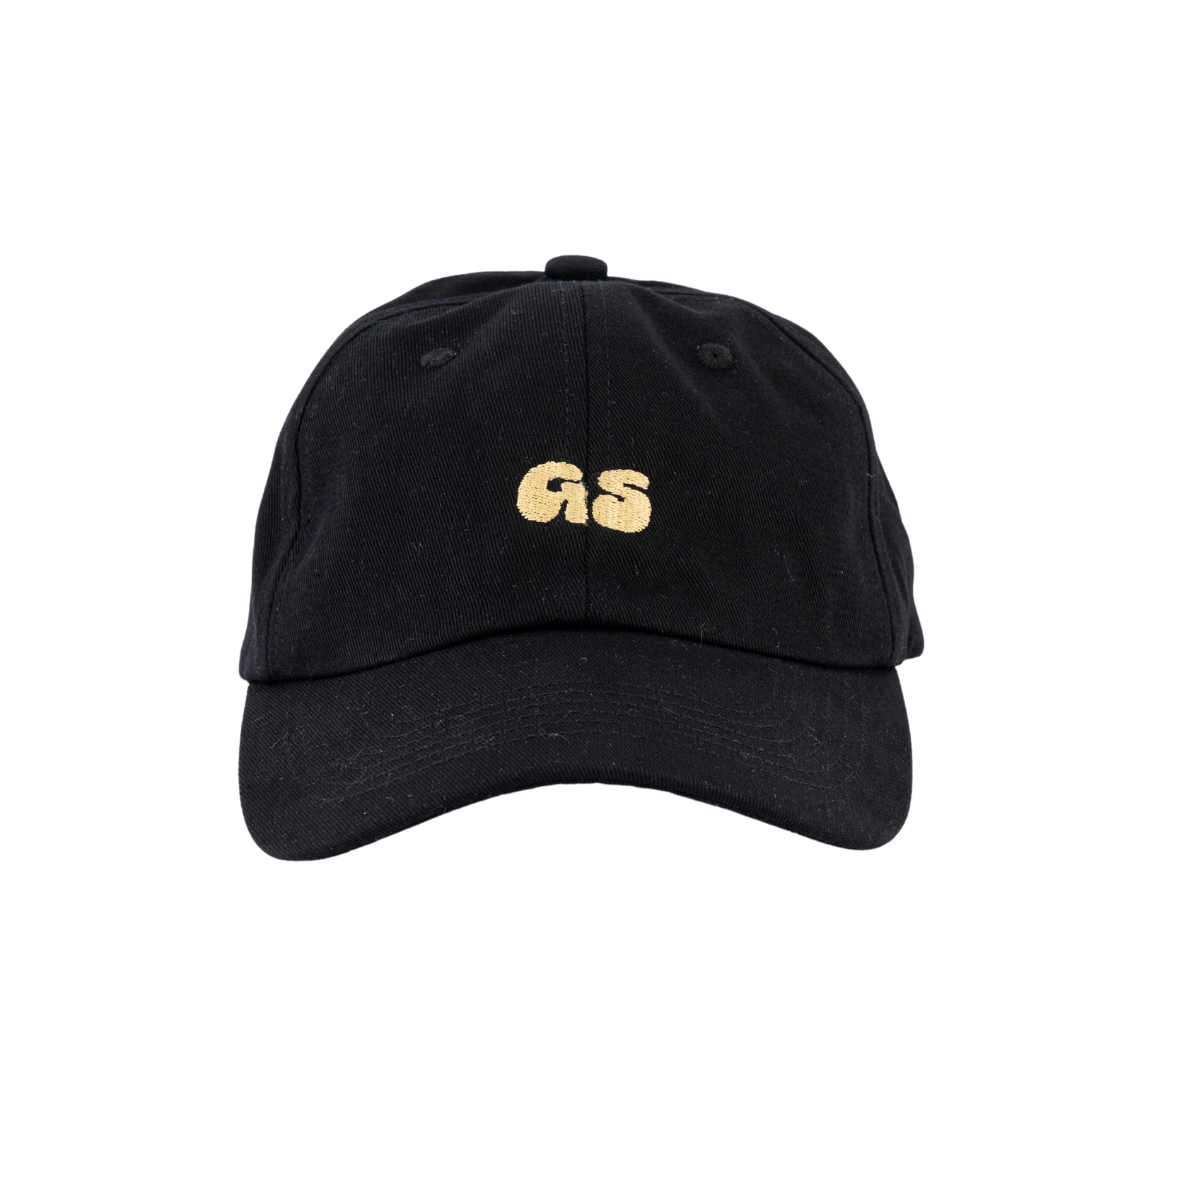 GS yellow |  Black / Cap